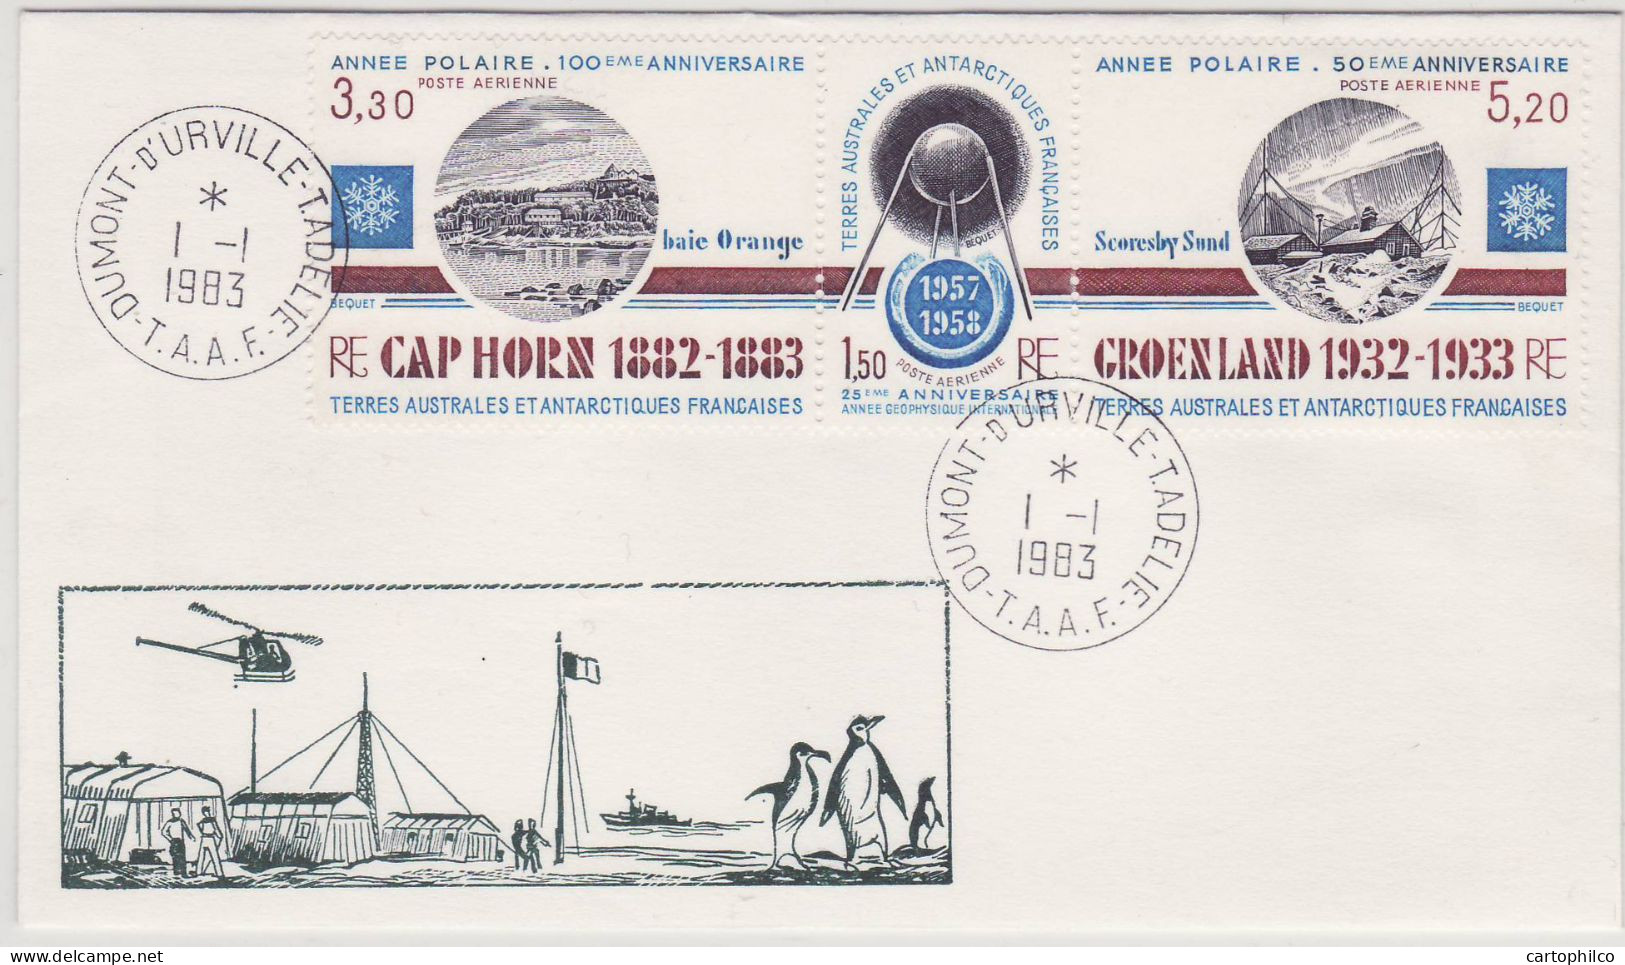 'TAAF Lettre Cap Horn Groenland 1932 1933 Dumont D''Urville 1 1 1983' - Covers & Documents